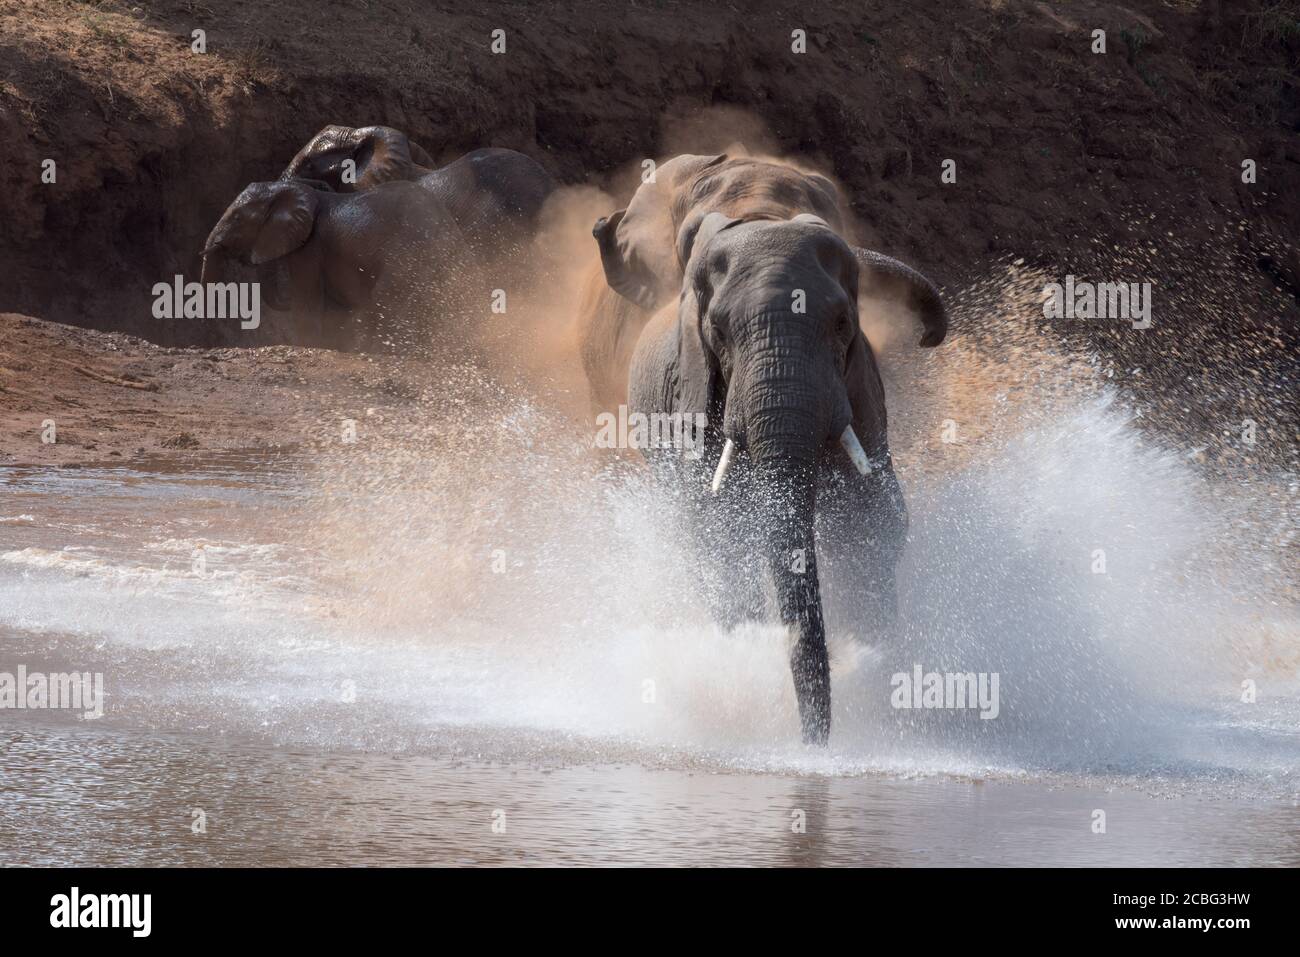 Water splashing as elephant bulls fighting Stock Photo